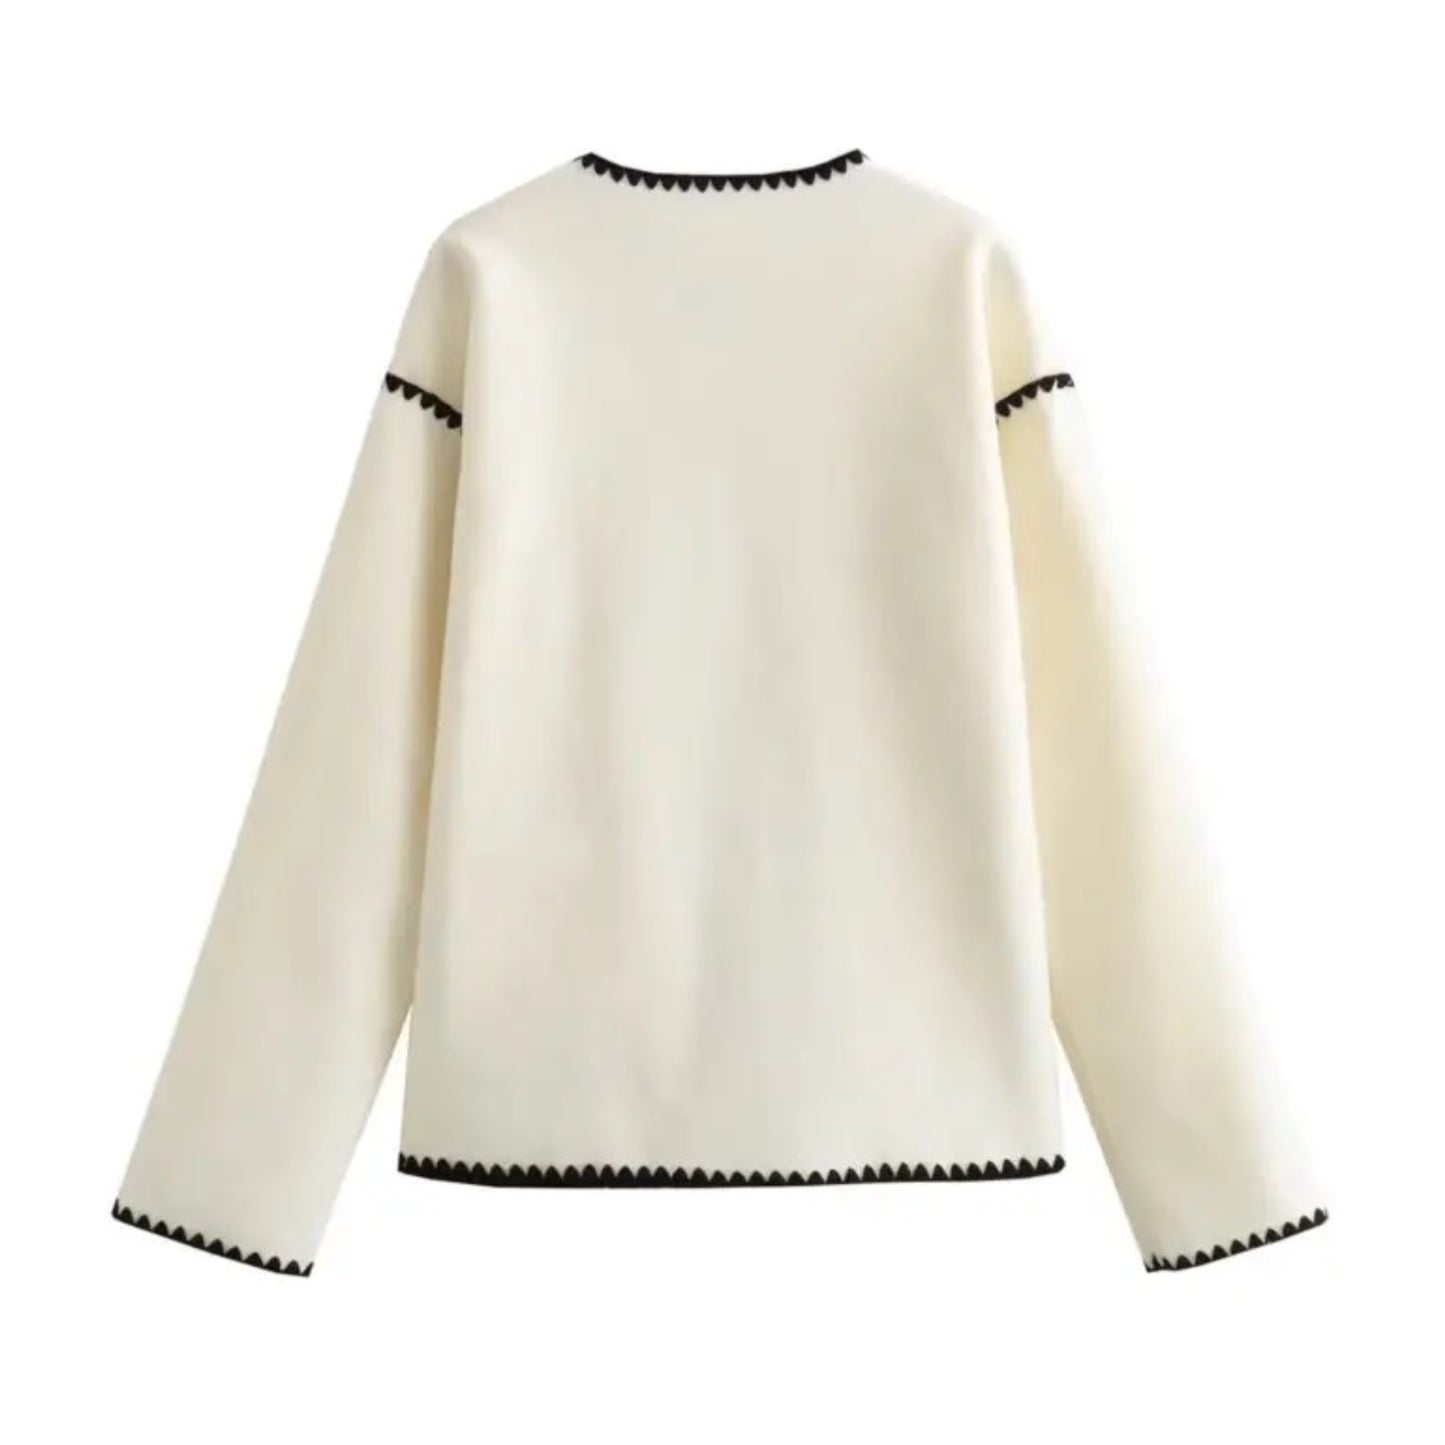 Ivory & Black Trim Knit Cardigan Sweater